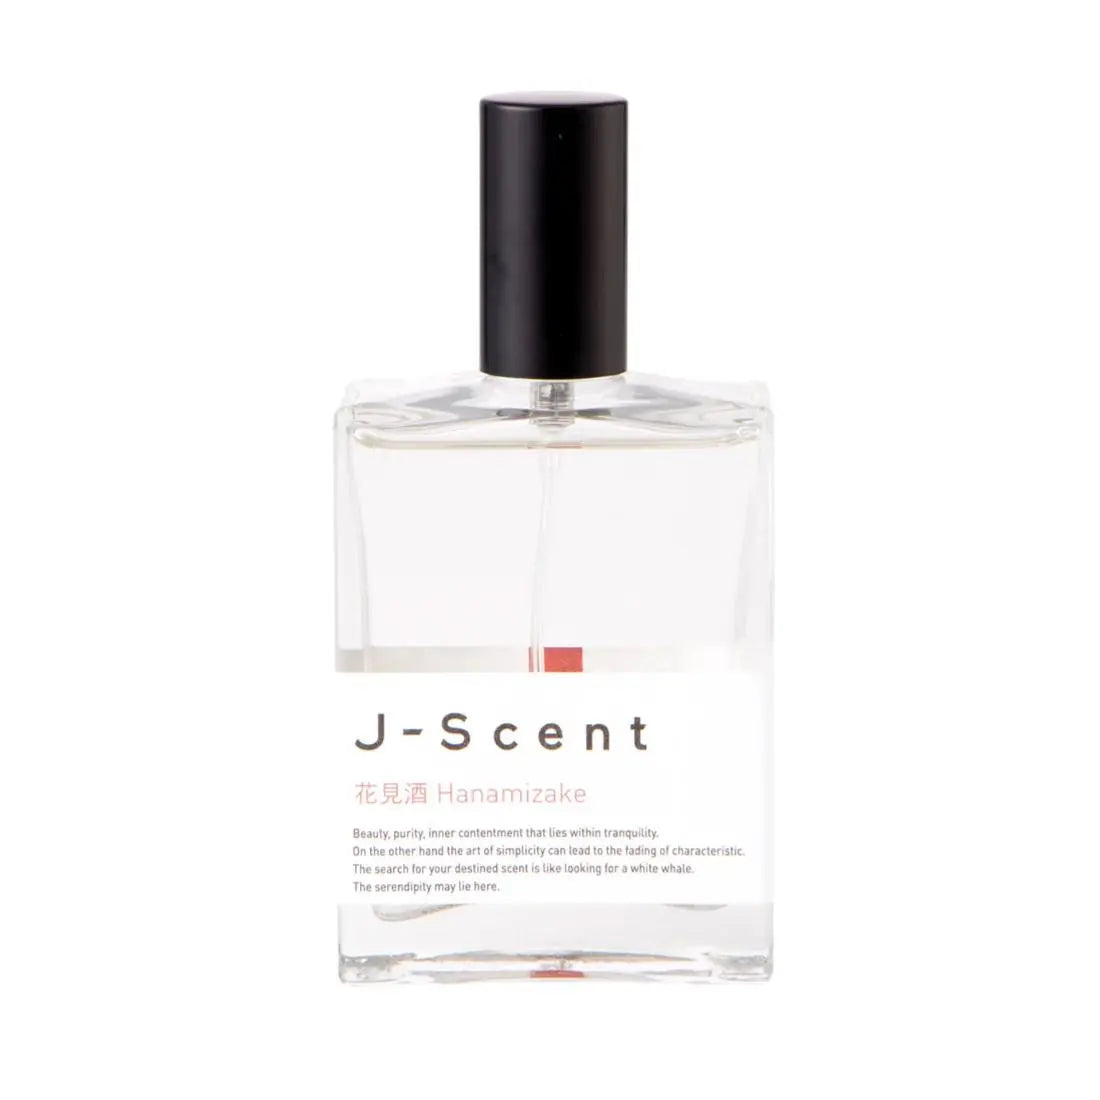 J-scent Ханамизаке - 50мл